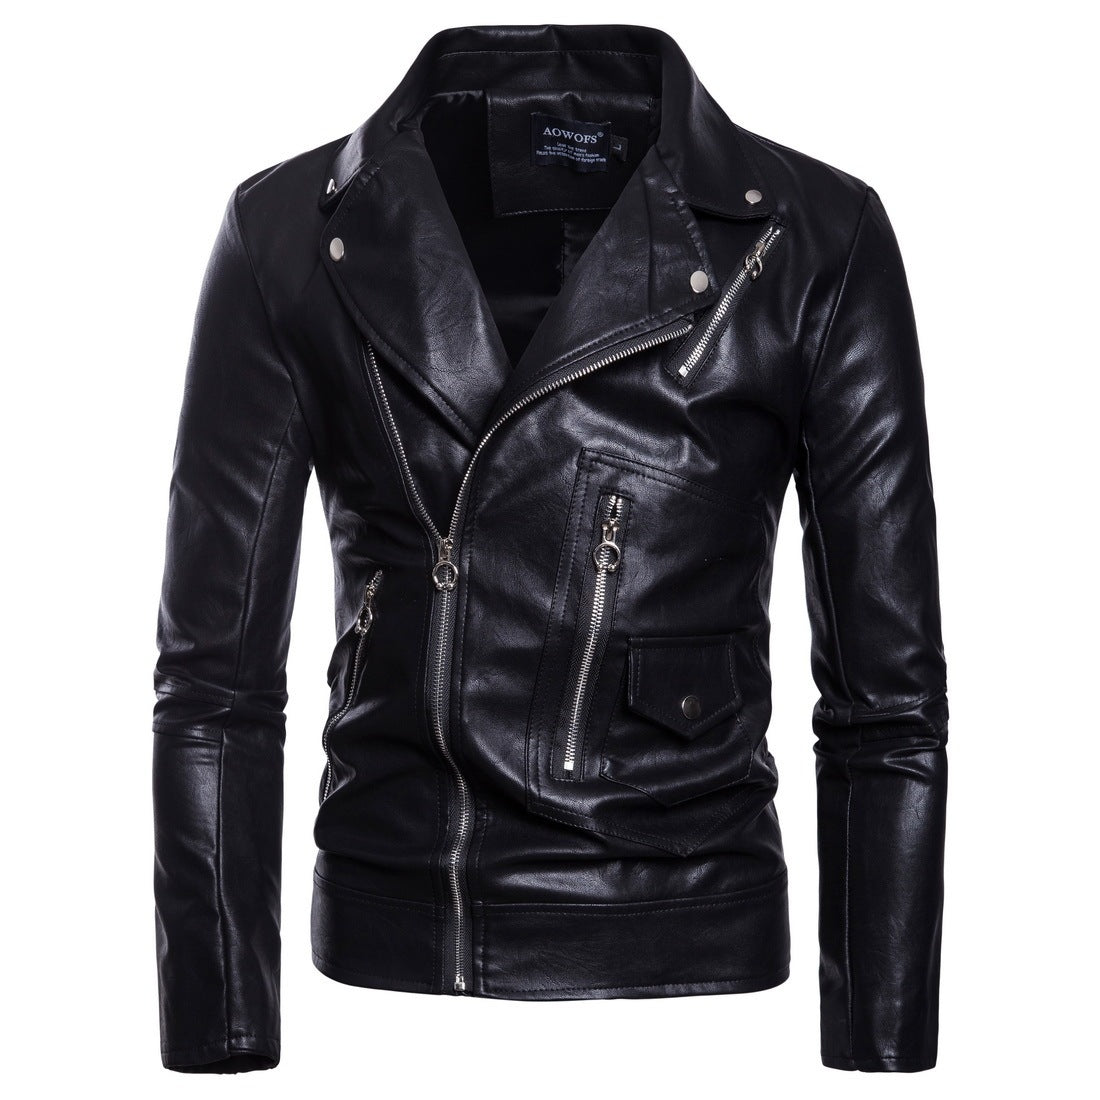 Men's Motorcycle Multi Zip Leather Coat apparels & accessories